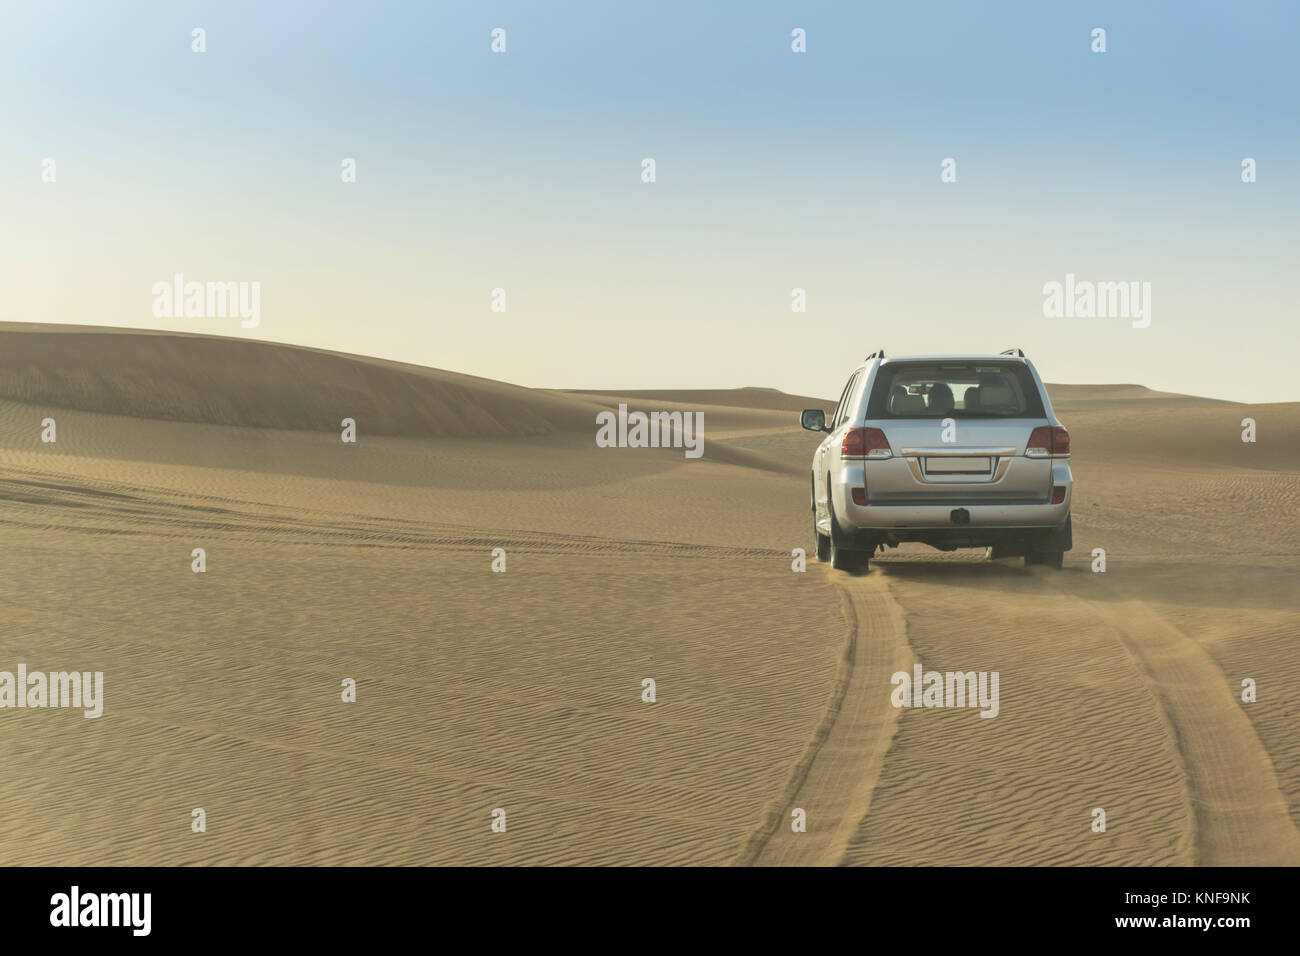 Off road vehicle driving over desert dunes, Dubai, United Arab Emirates Stock Photo